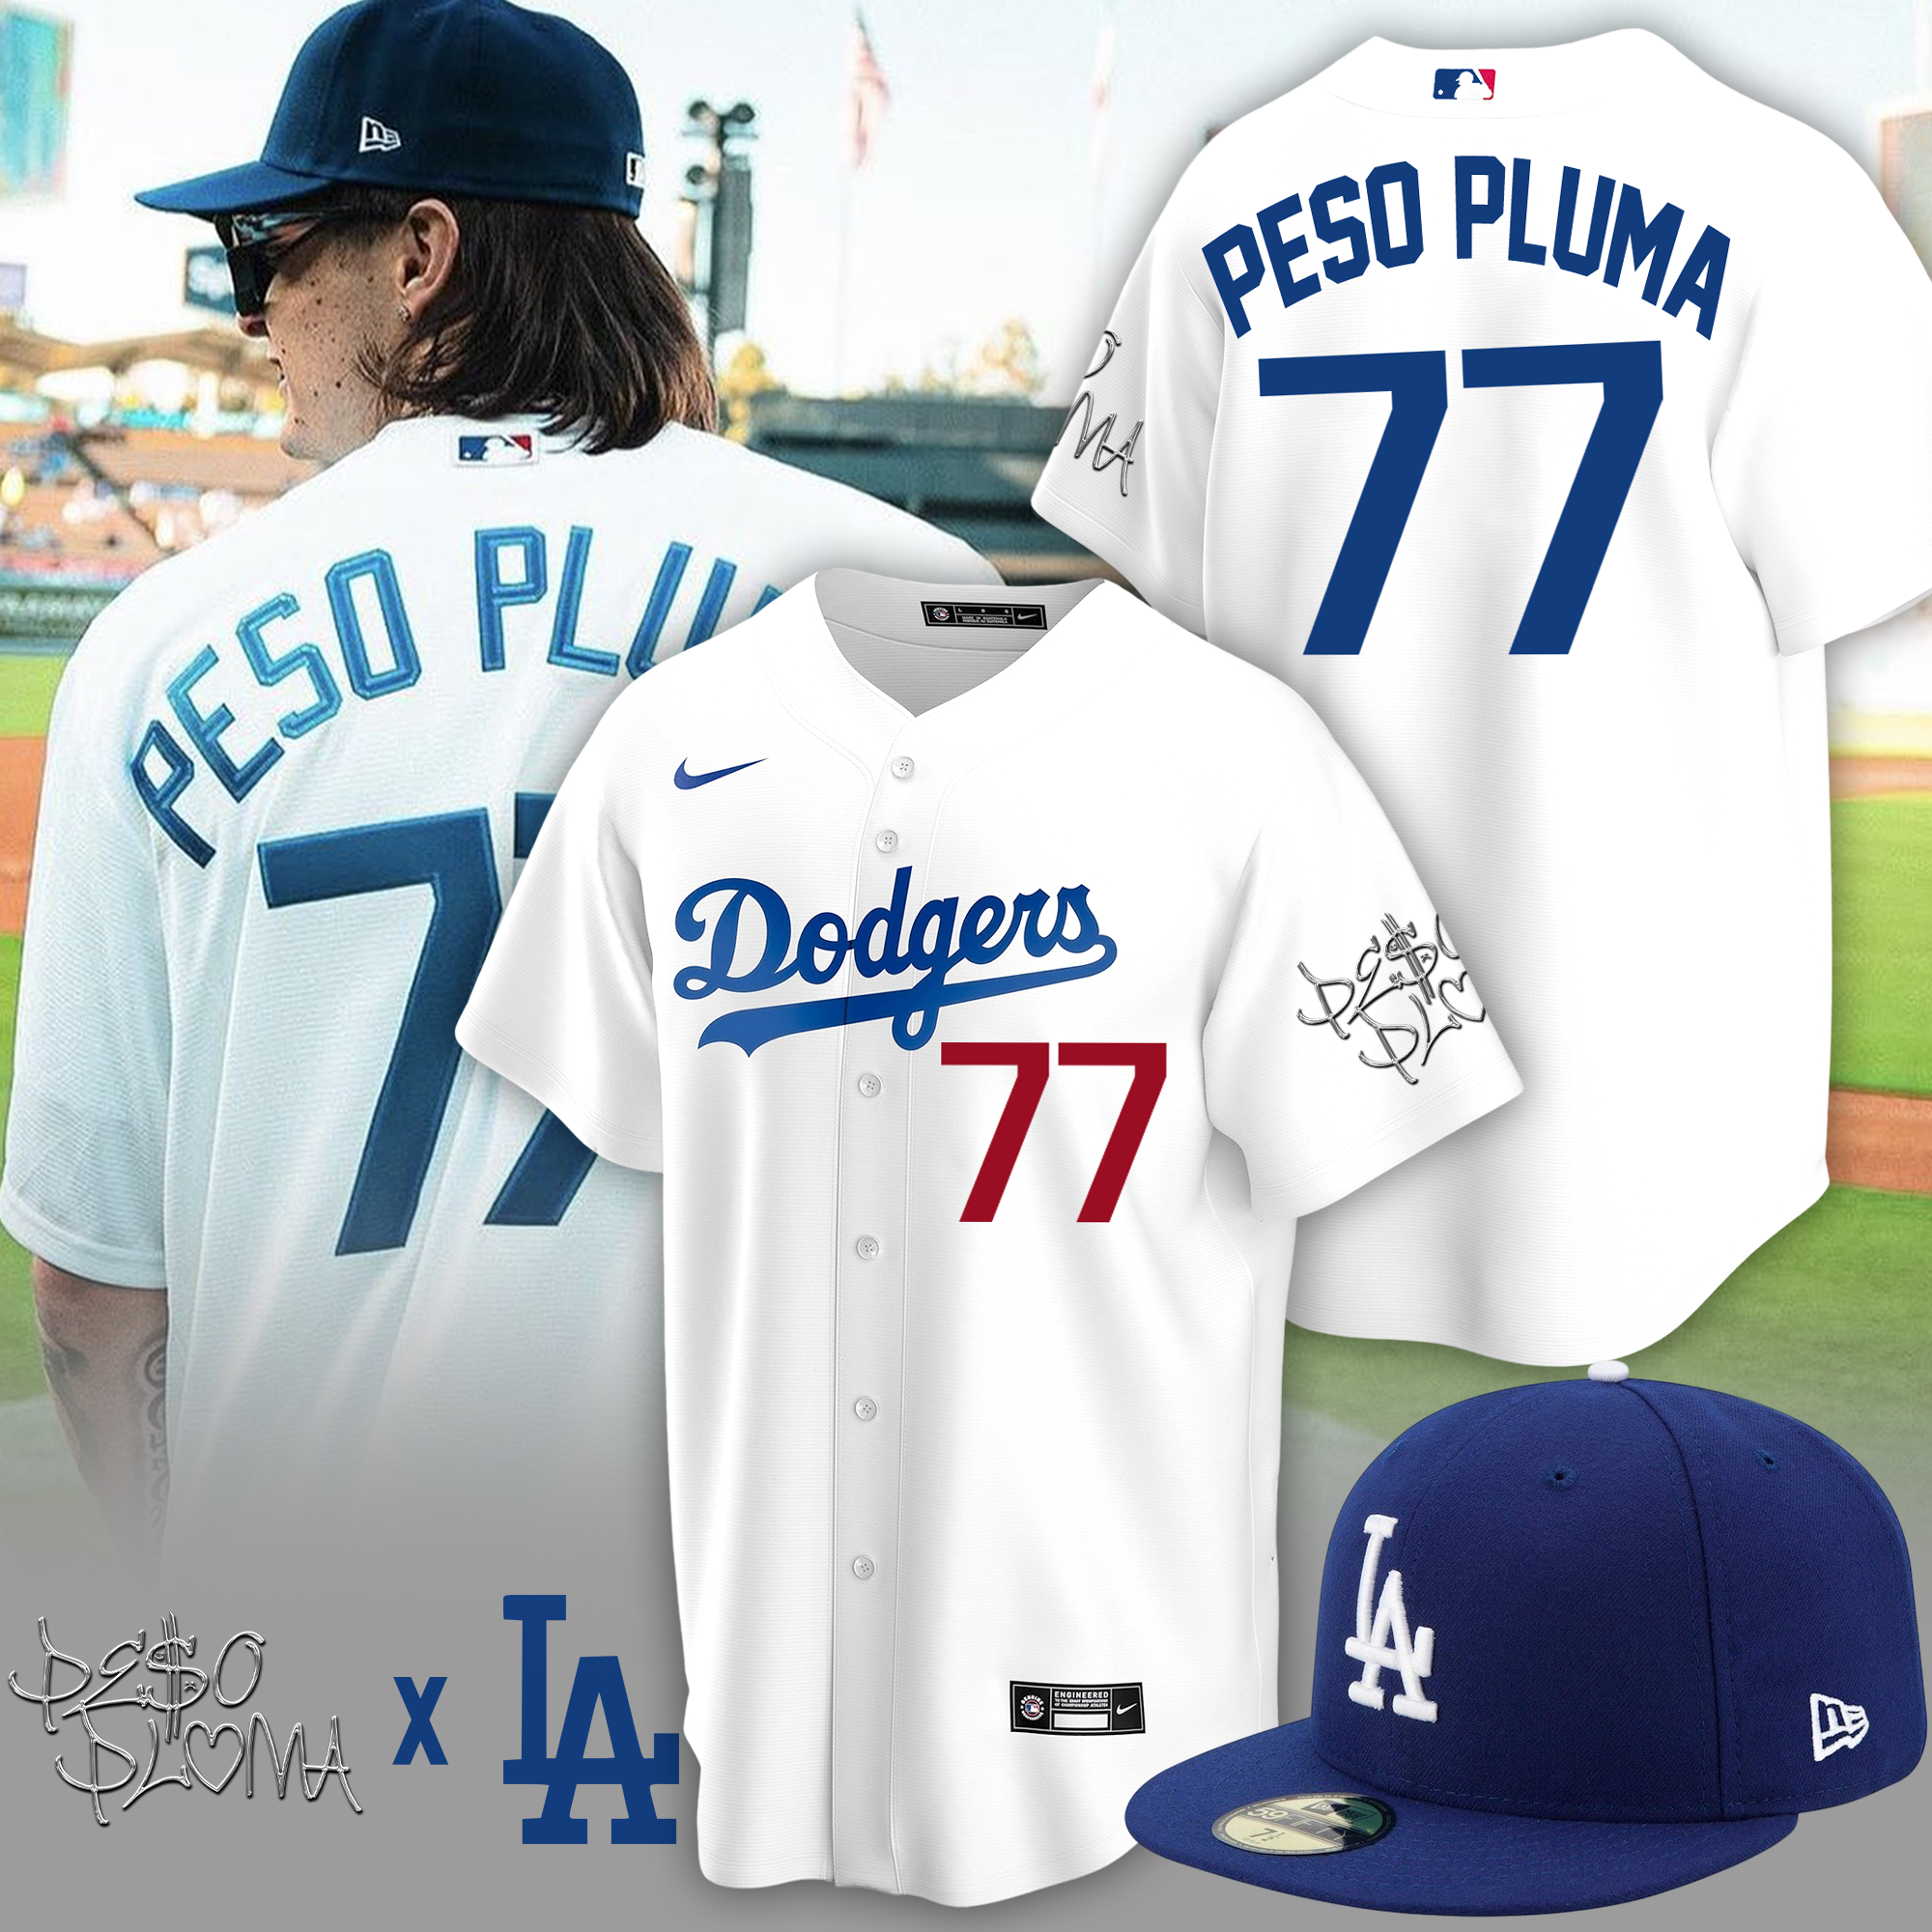 Peso Pluma Los Angeles Dodgers Mexico Flag Baseball Jersey